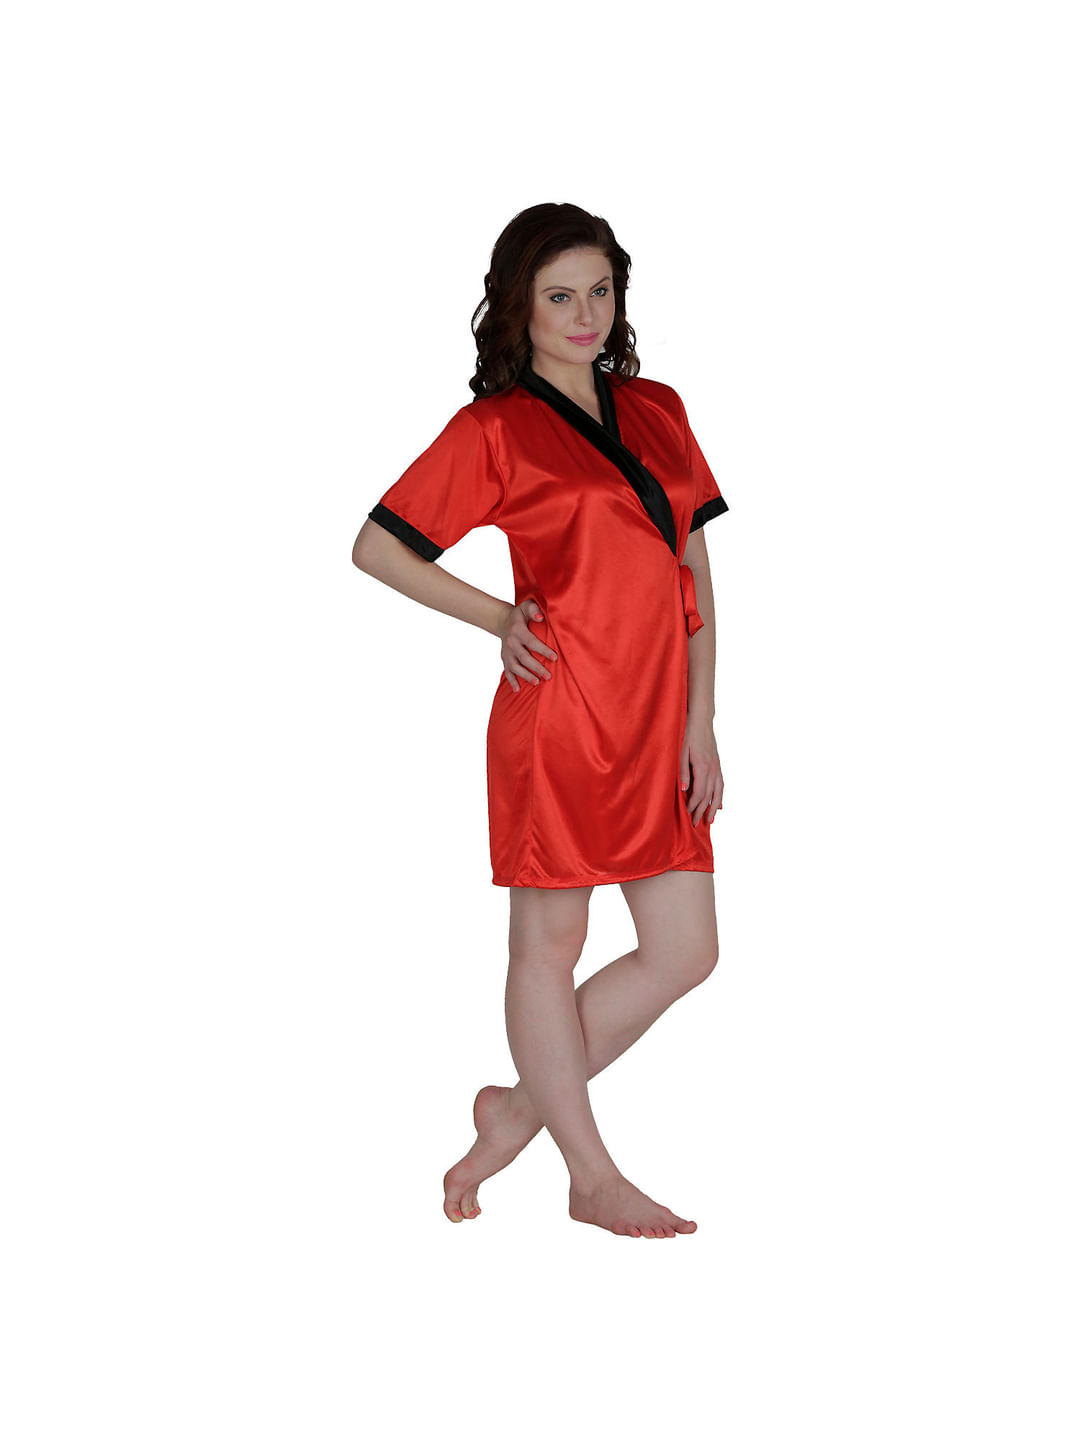 Satin Black, Red Robe, Housecoat (Free Size, HC-56)